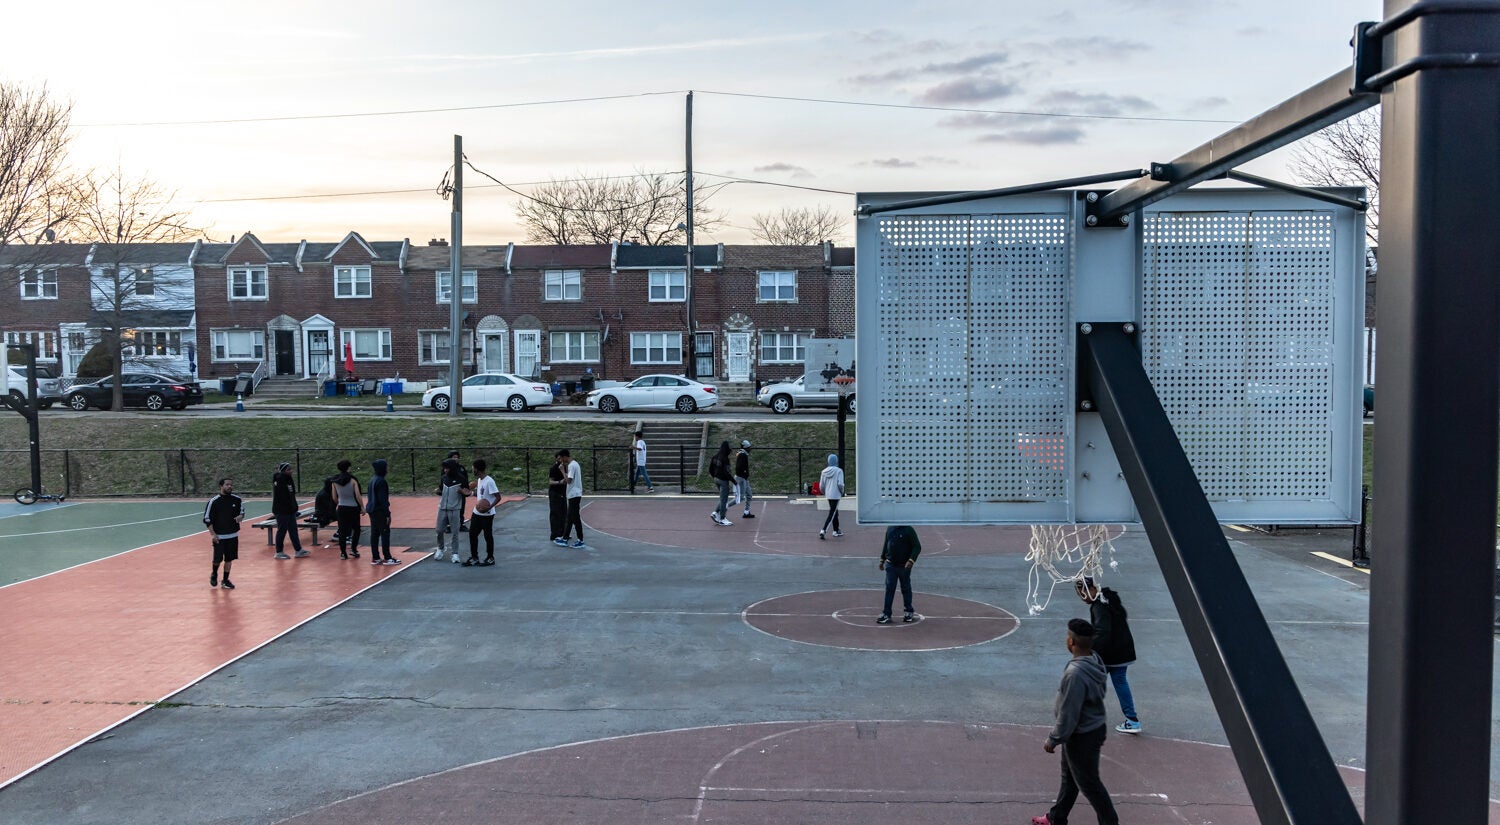 Kids play on a basketball court